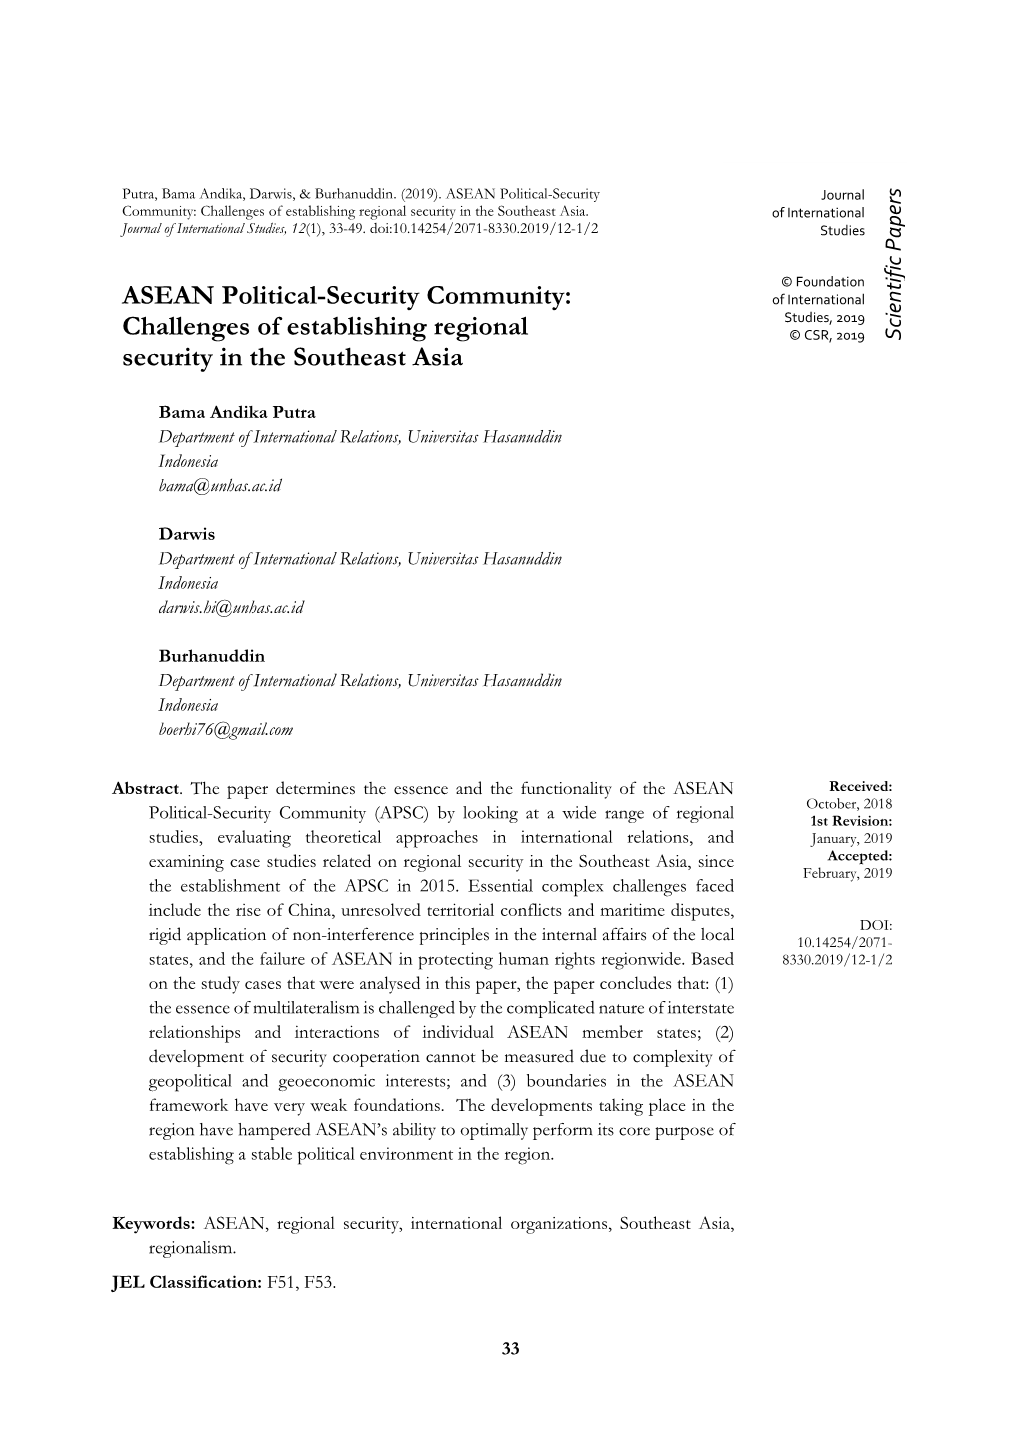 ASEAN Political-Security Community: of International Studies, 2019